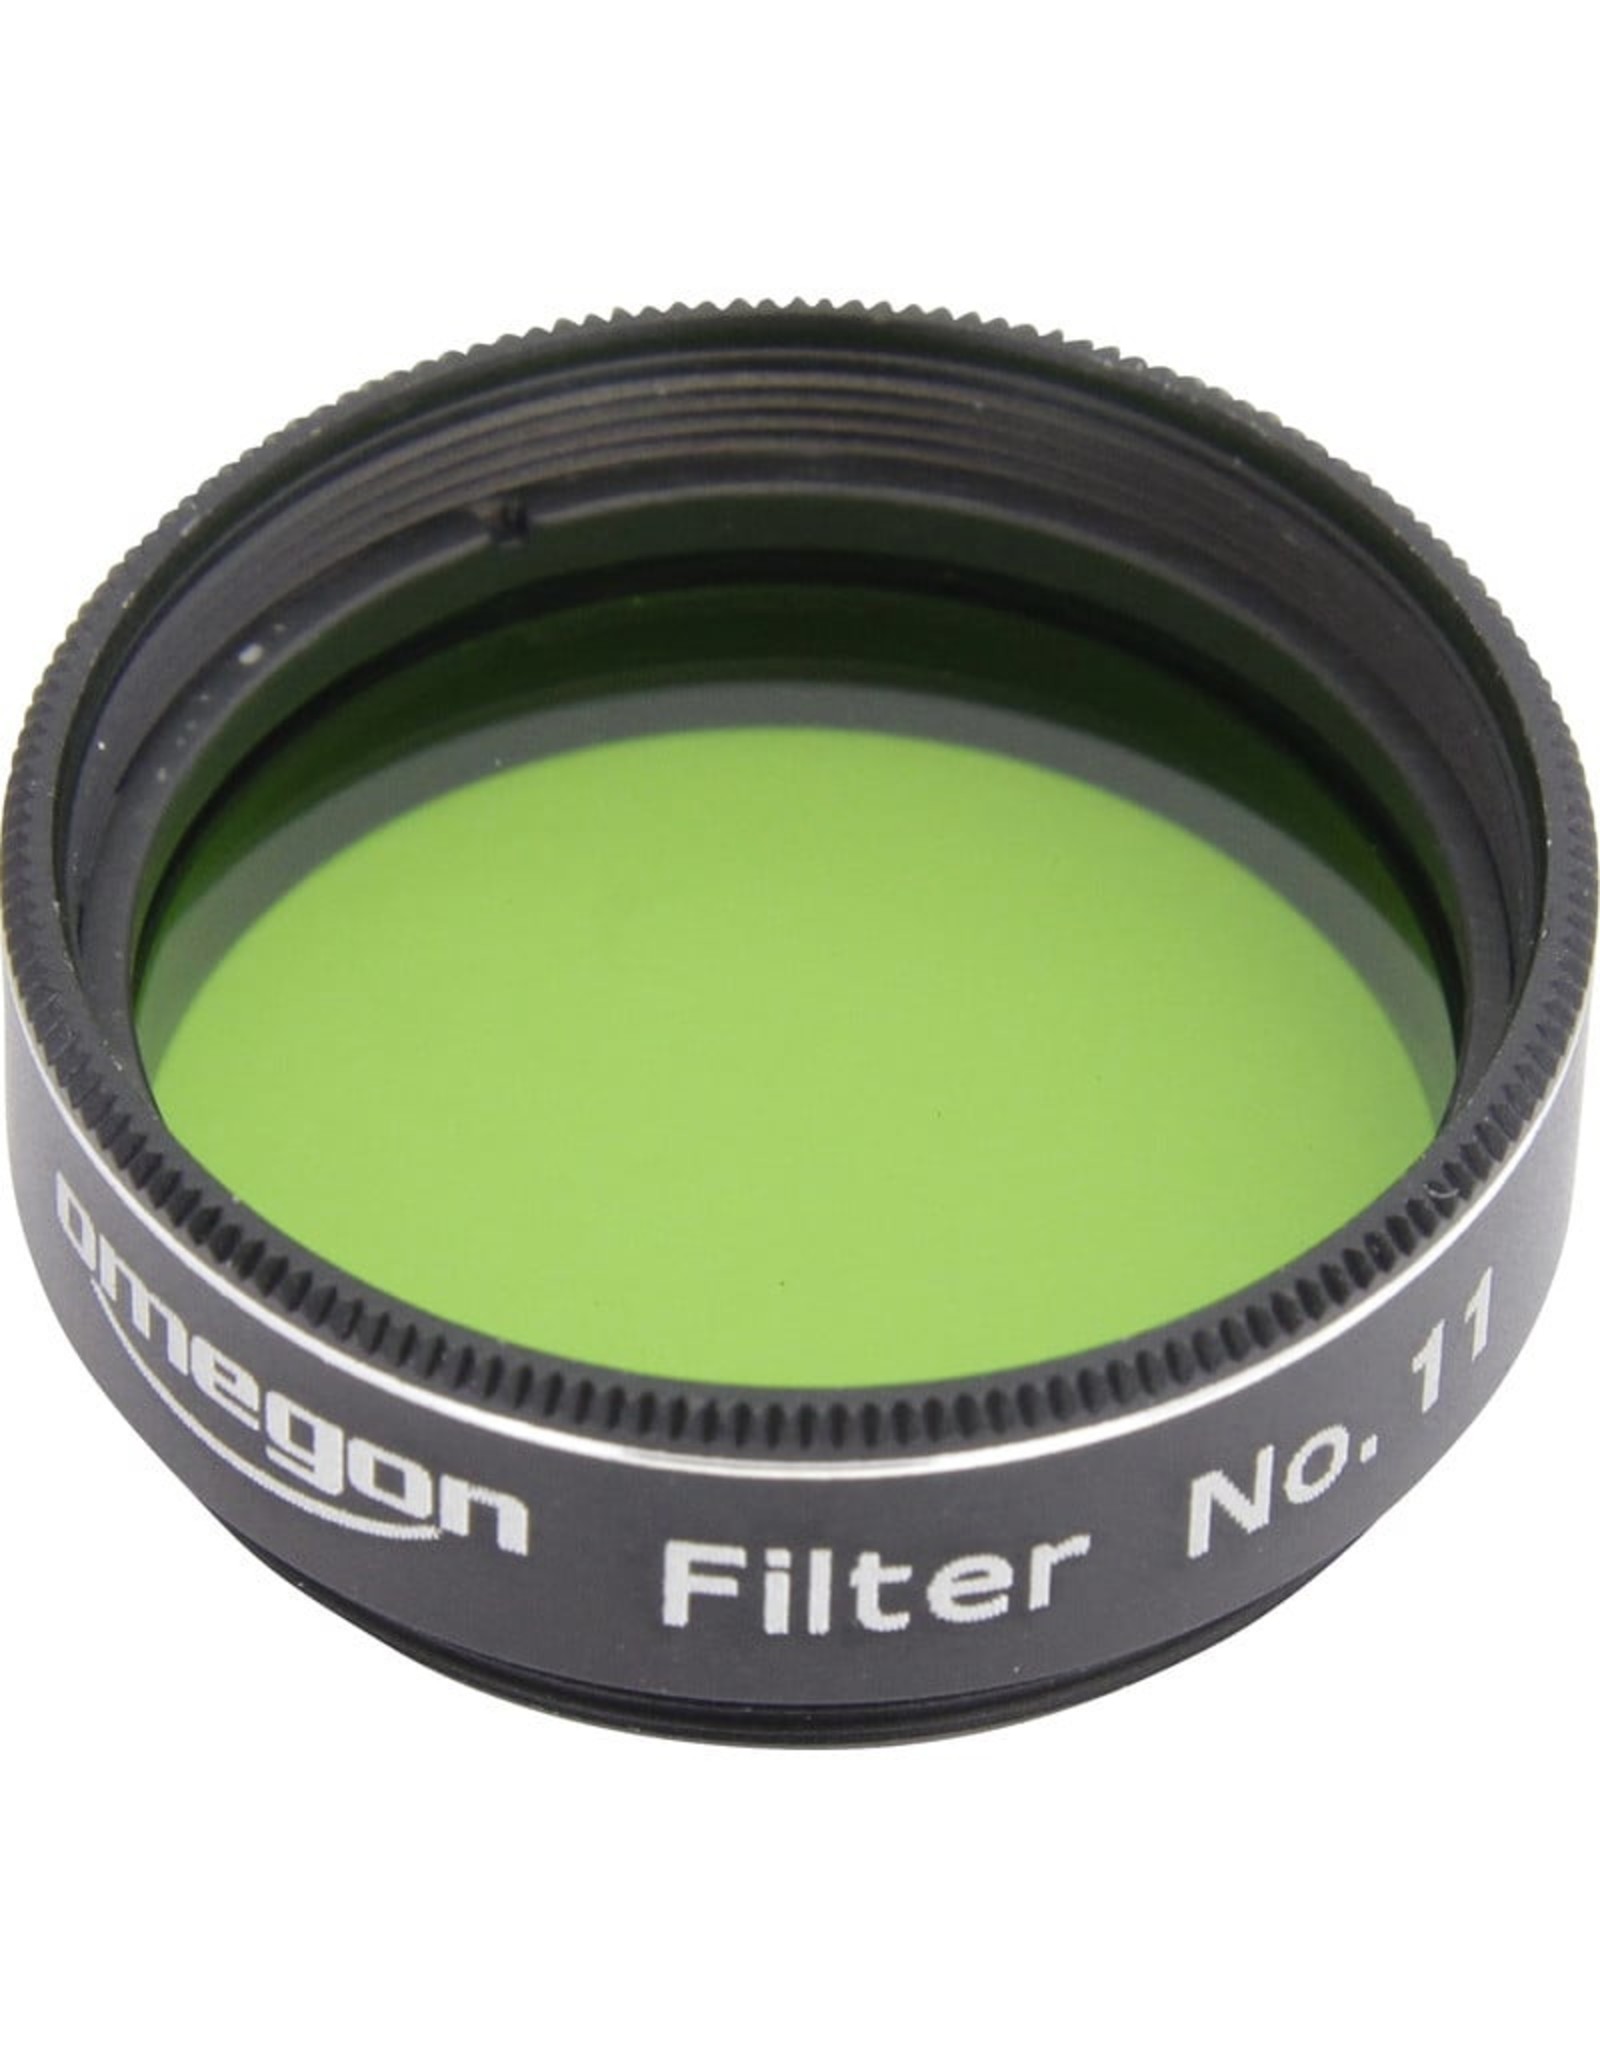 Omegon Filters kleurfilter #11, geelgroen, 1,25''